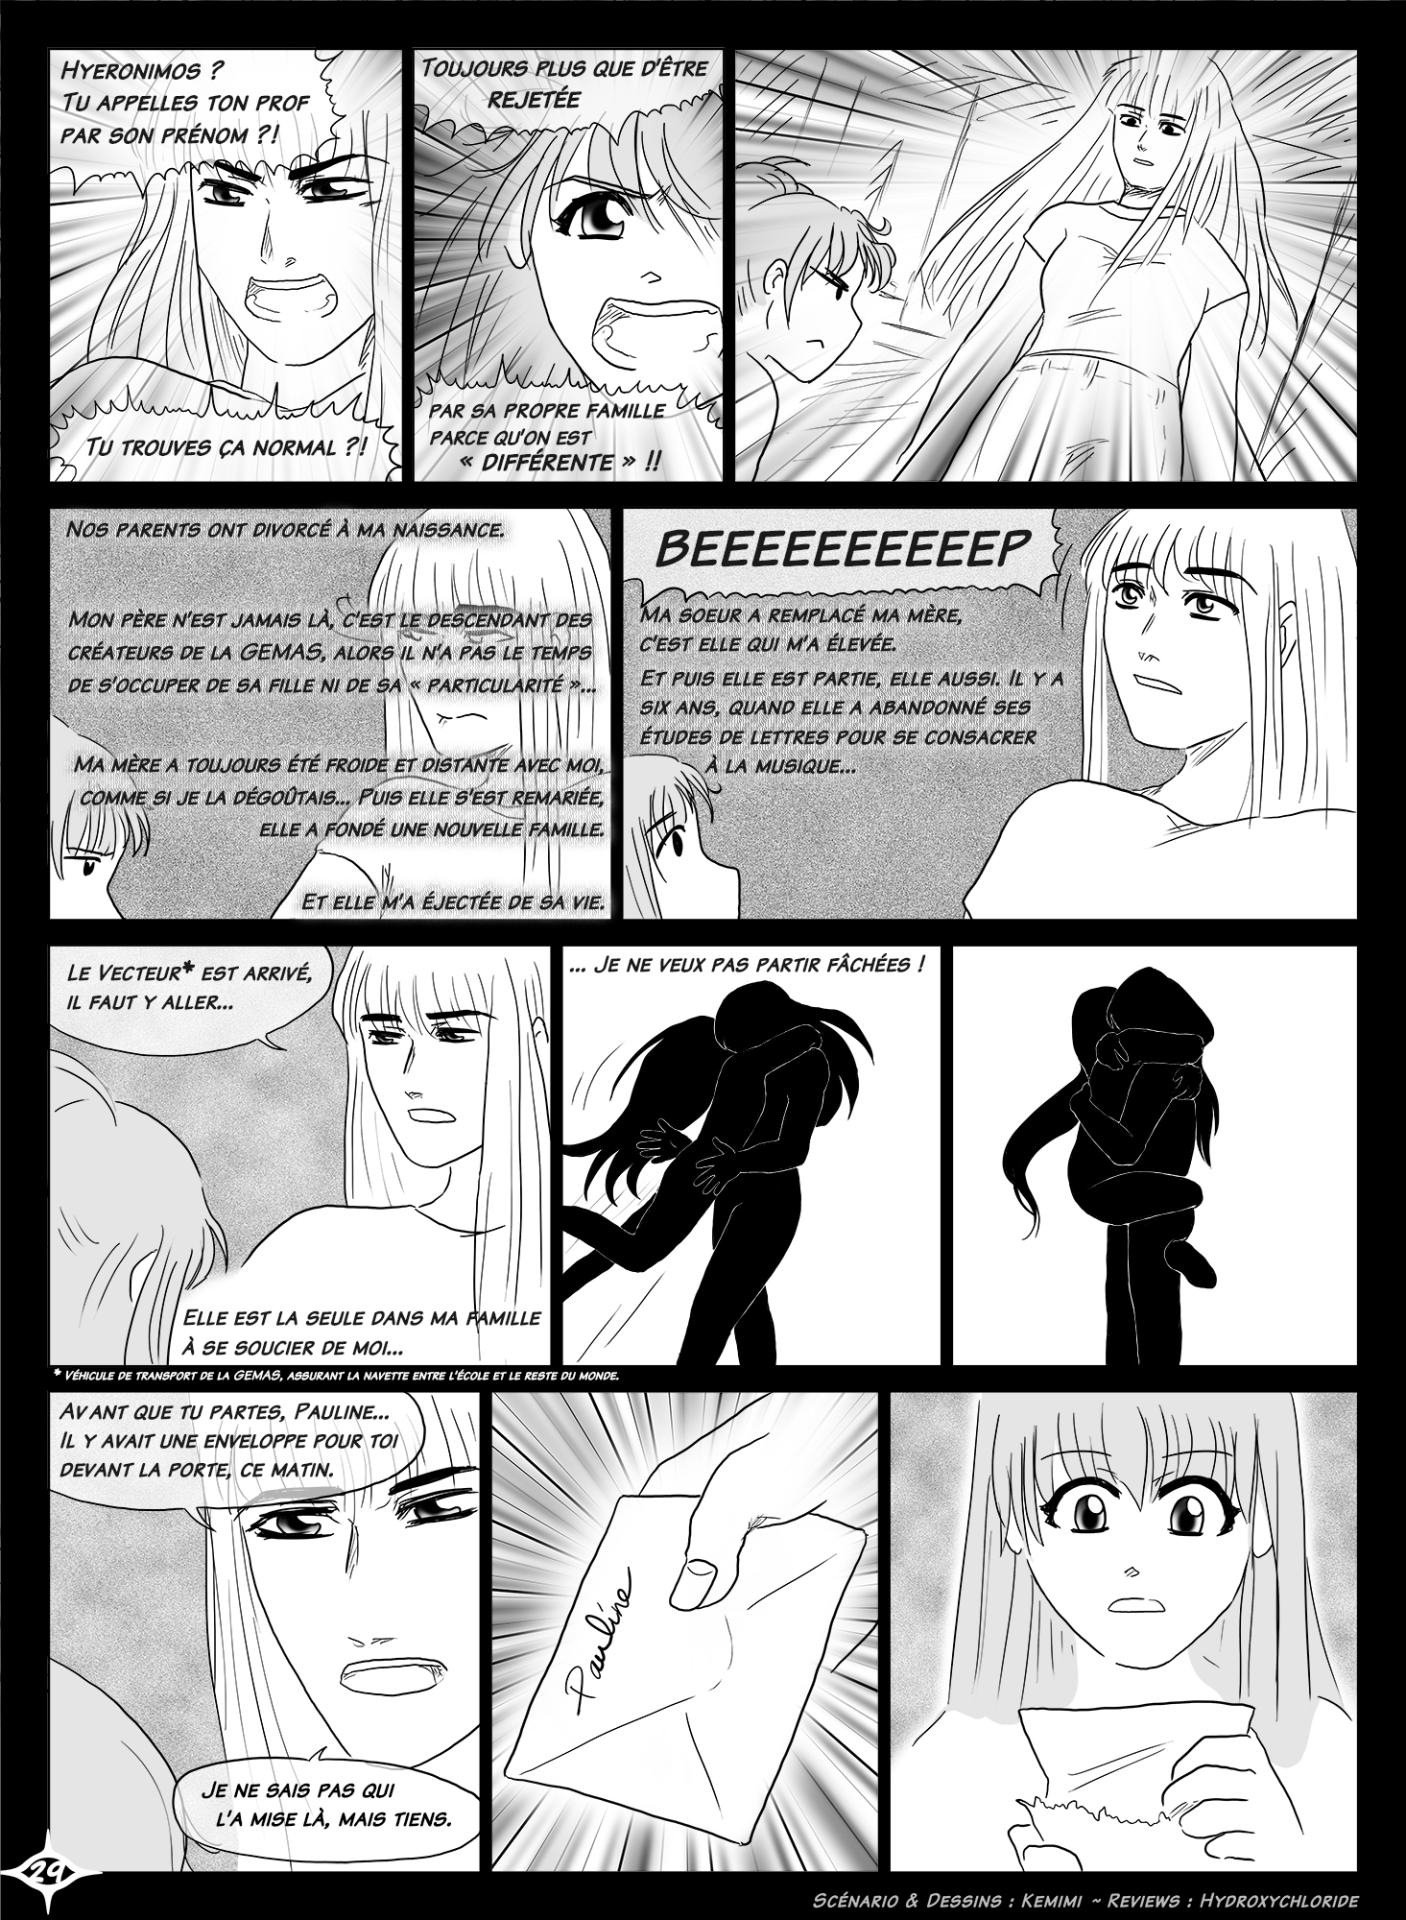 Chapitre 1 page 9 remake